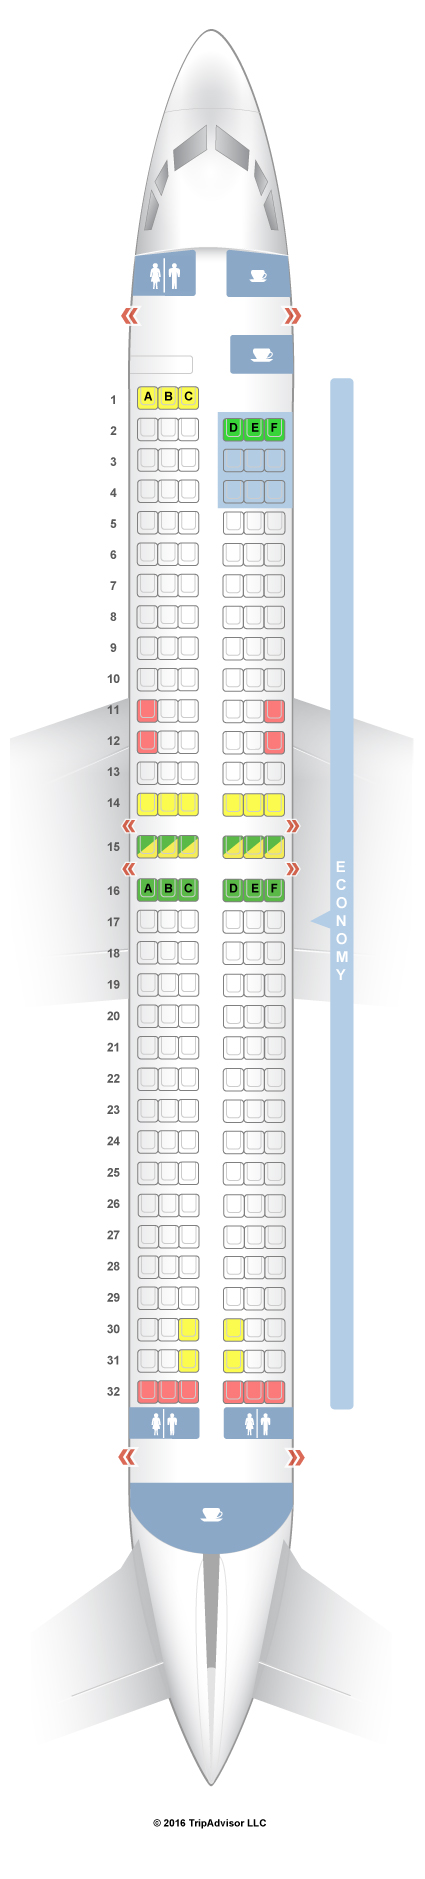 Sunwing 737 800 Seating Chart